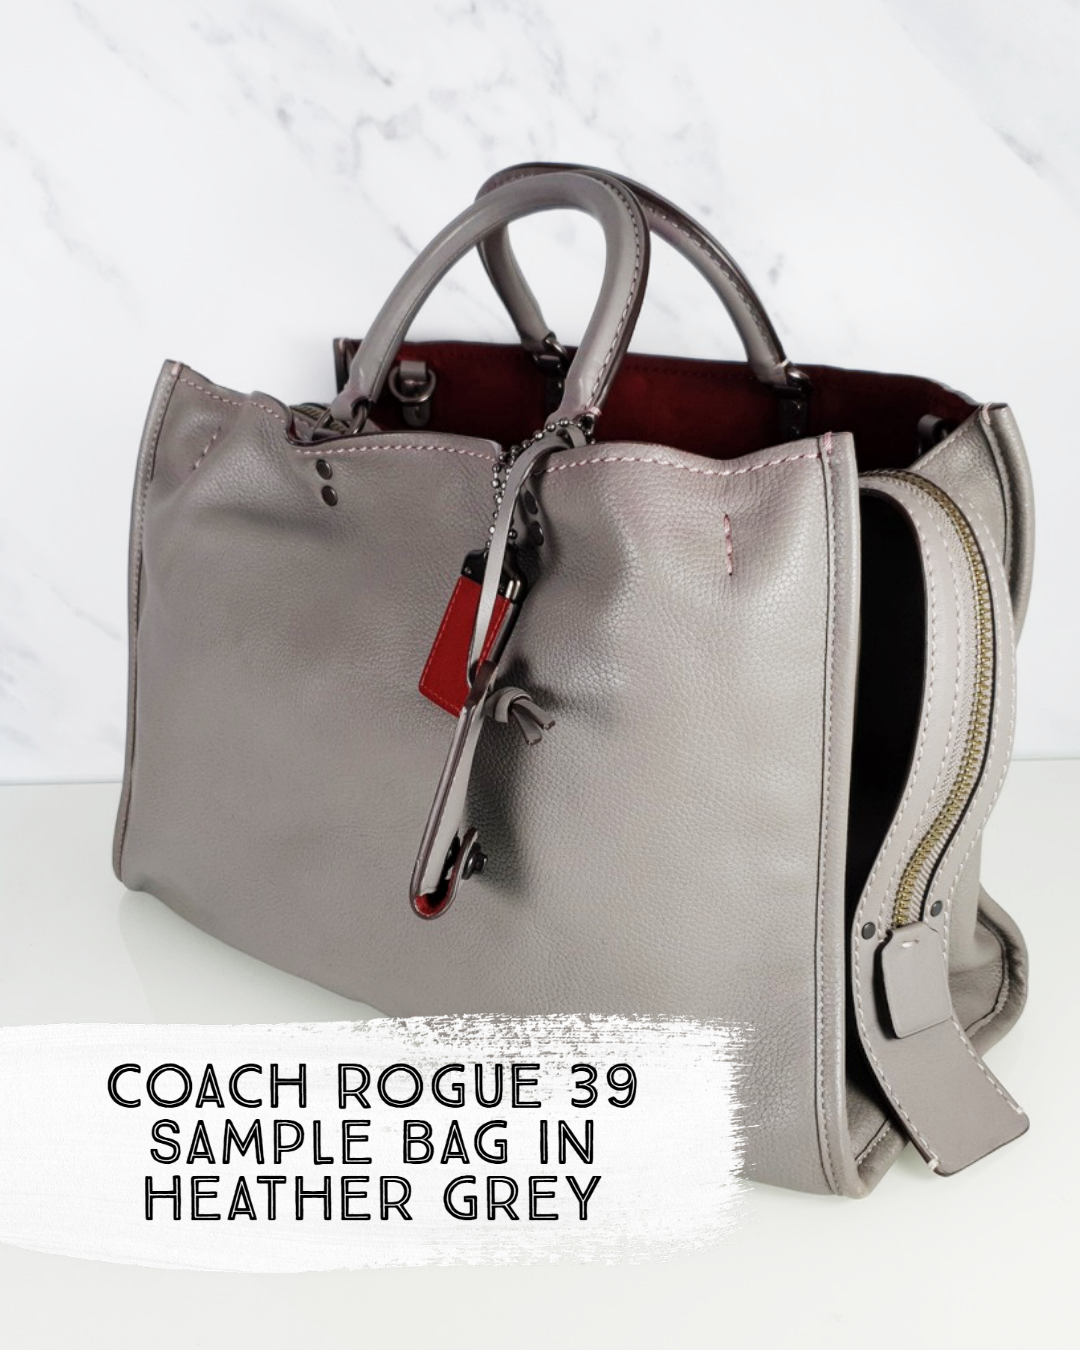 Coach Rogue 39 Sample Bag in Heather Grey - Essex Fashion House